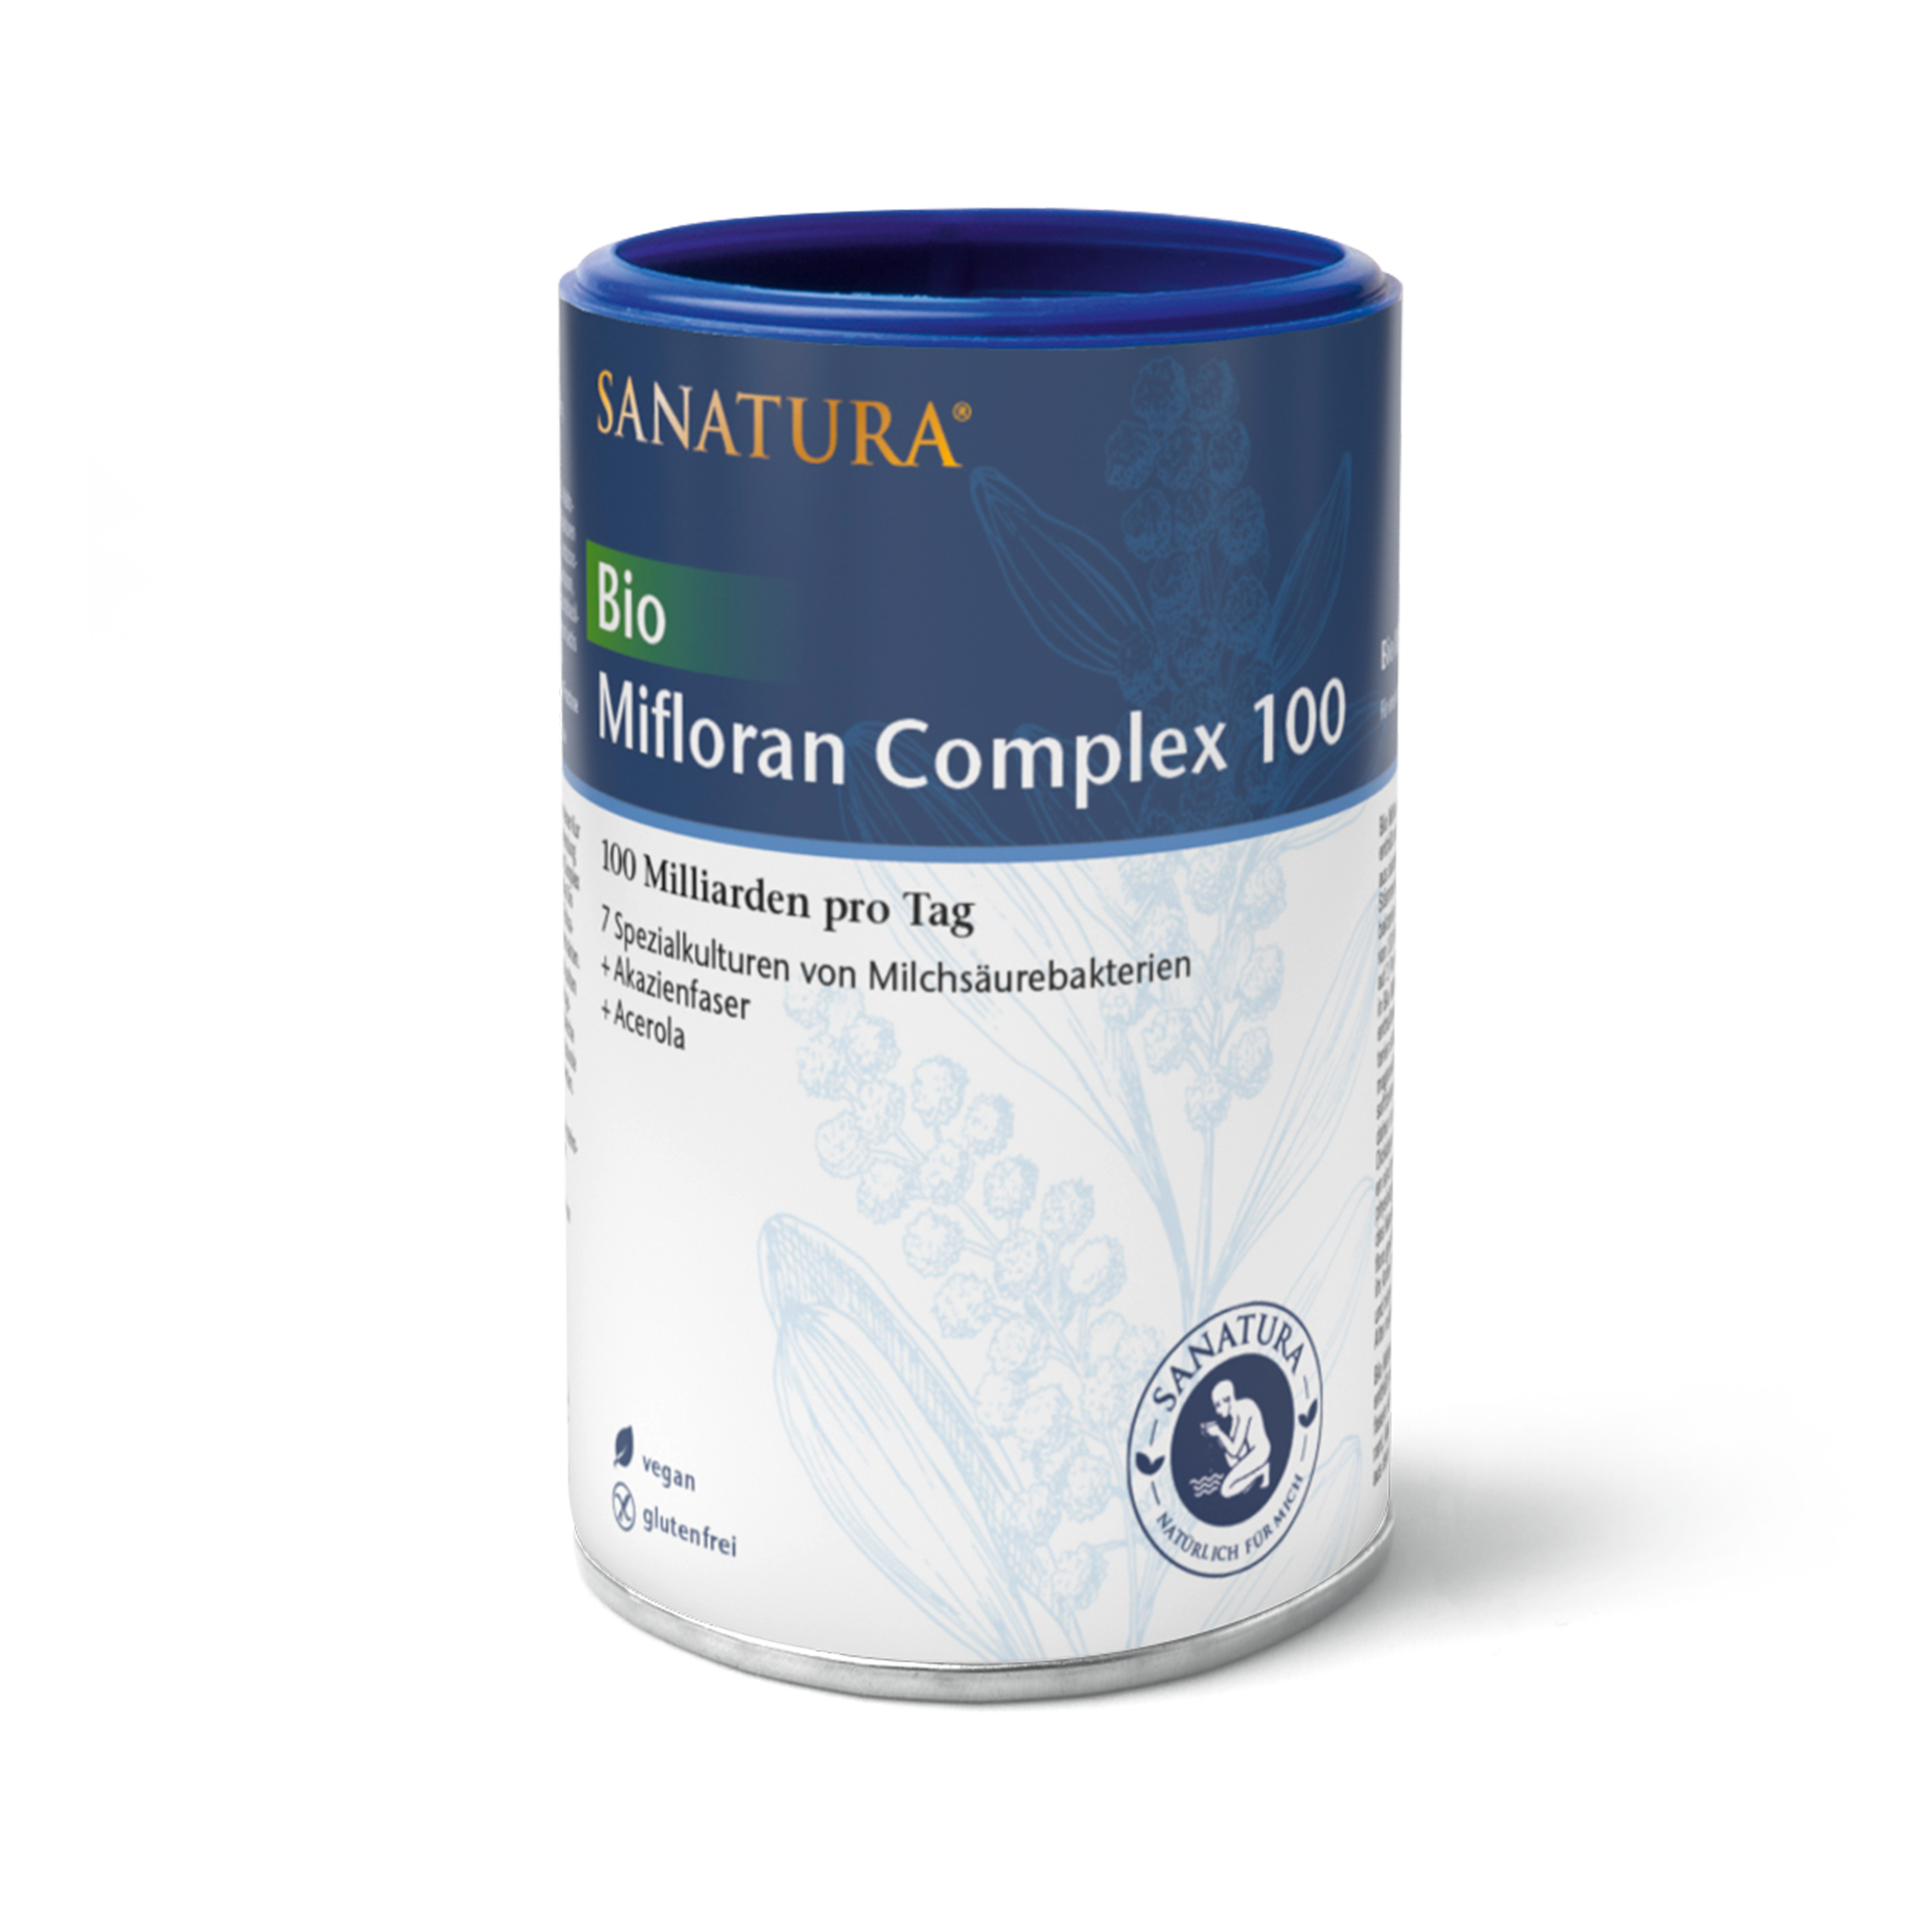 Sanatura Mifloran Complex 100 | 200g | Unterstützt Darmflora & Immunsystem mit 100 Milliarden Probiotika | Acerola-Vitamin C